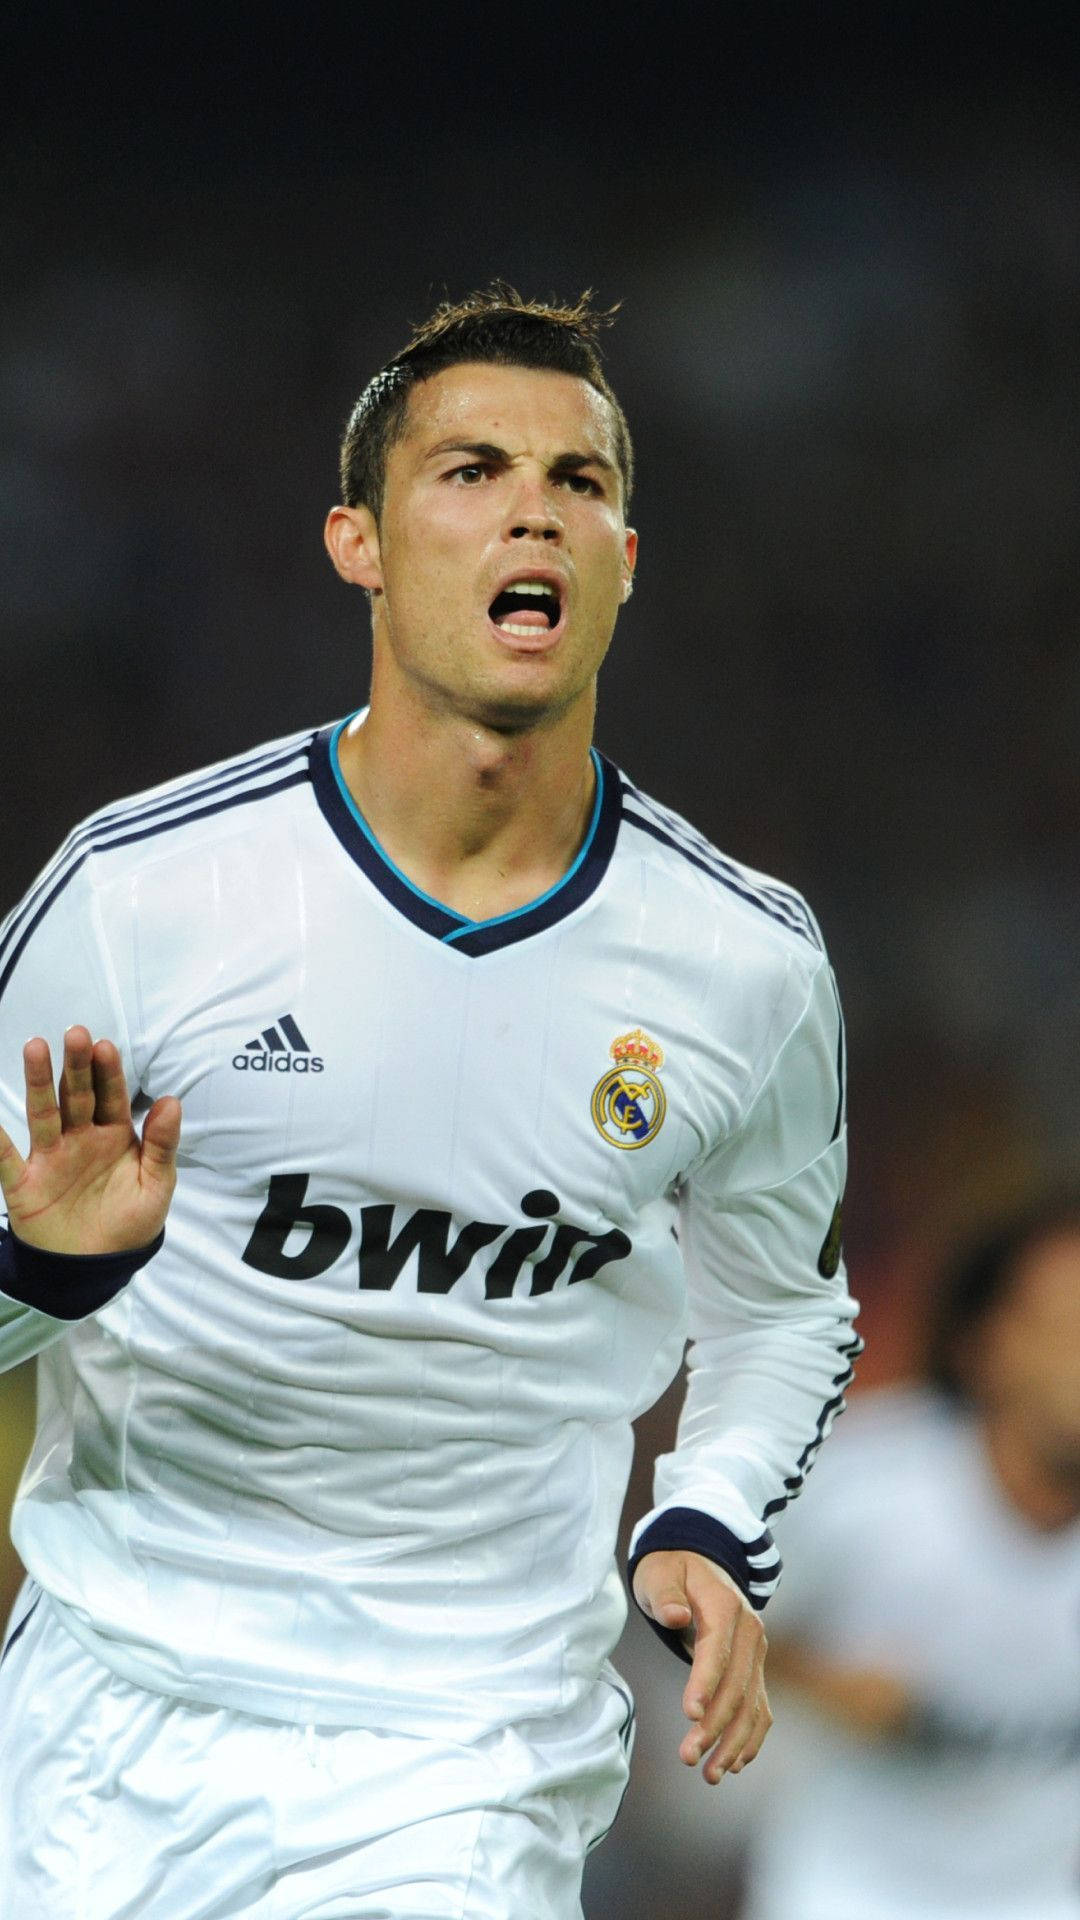 Bwin-logotyp Cristiano Ronaldo Iphone. Wallpaper